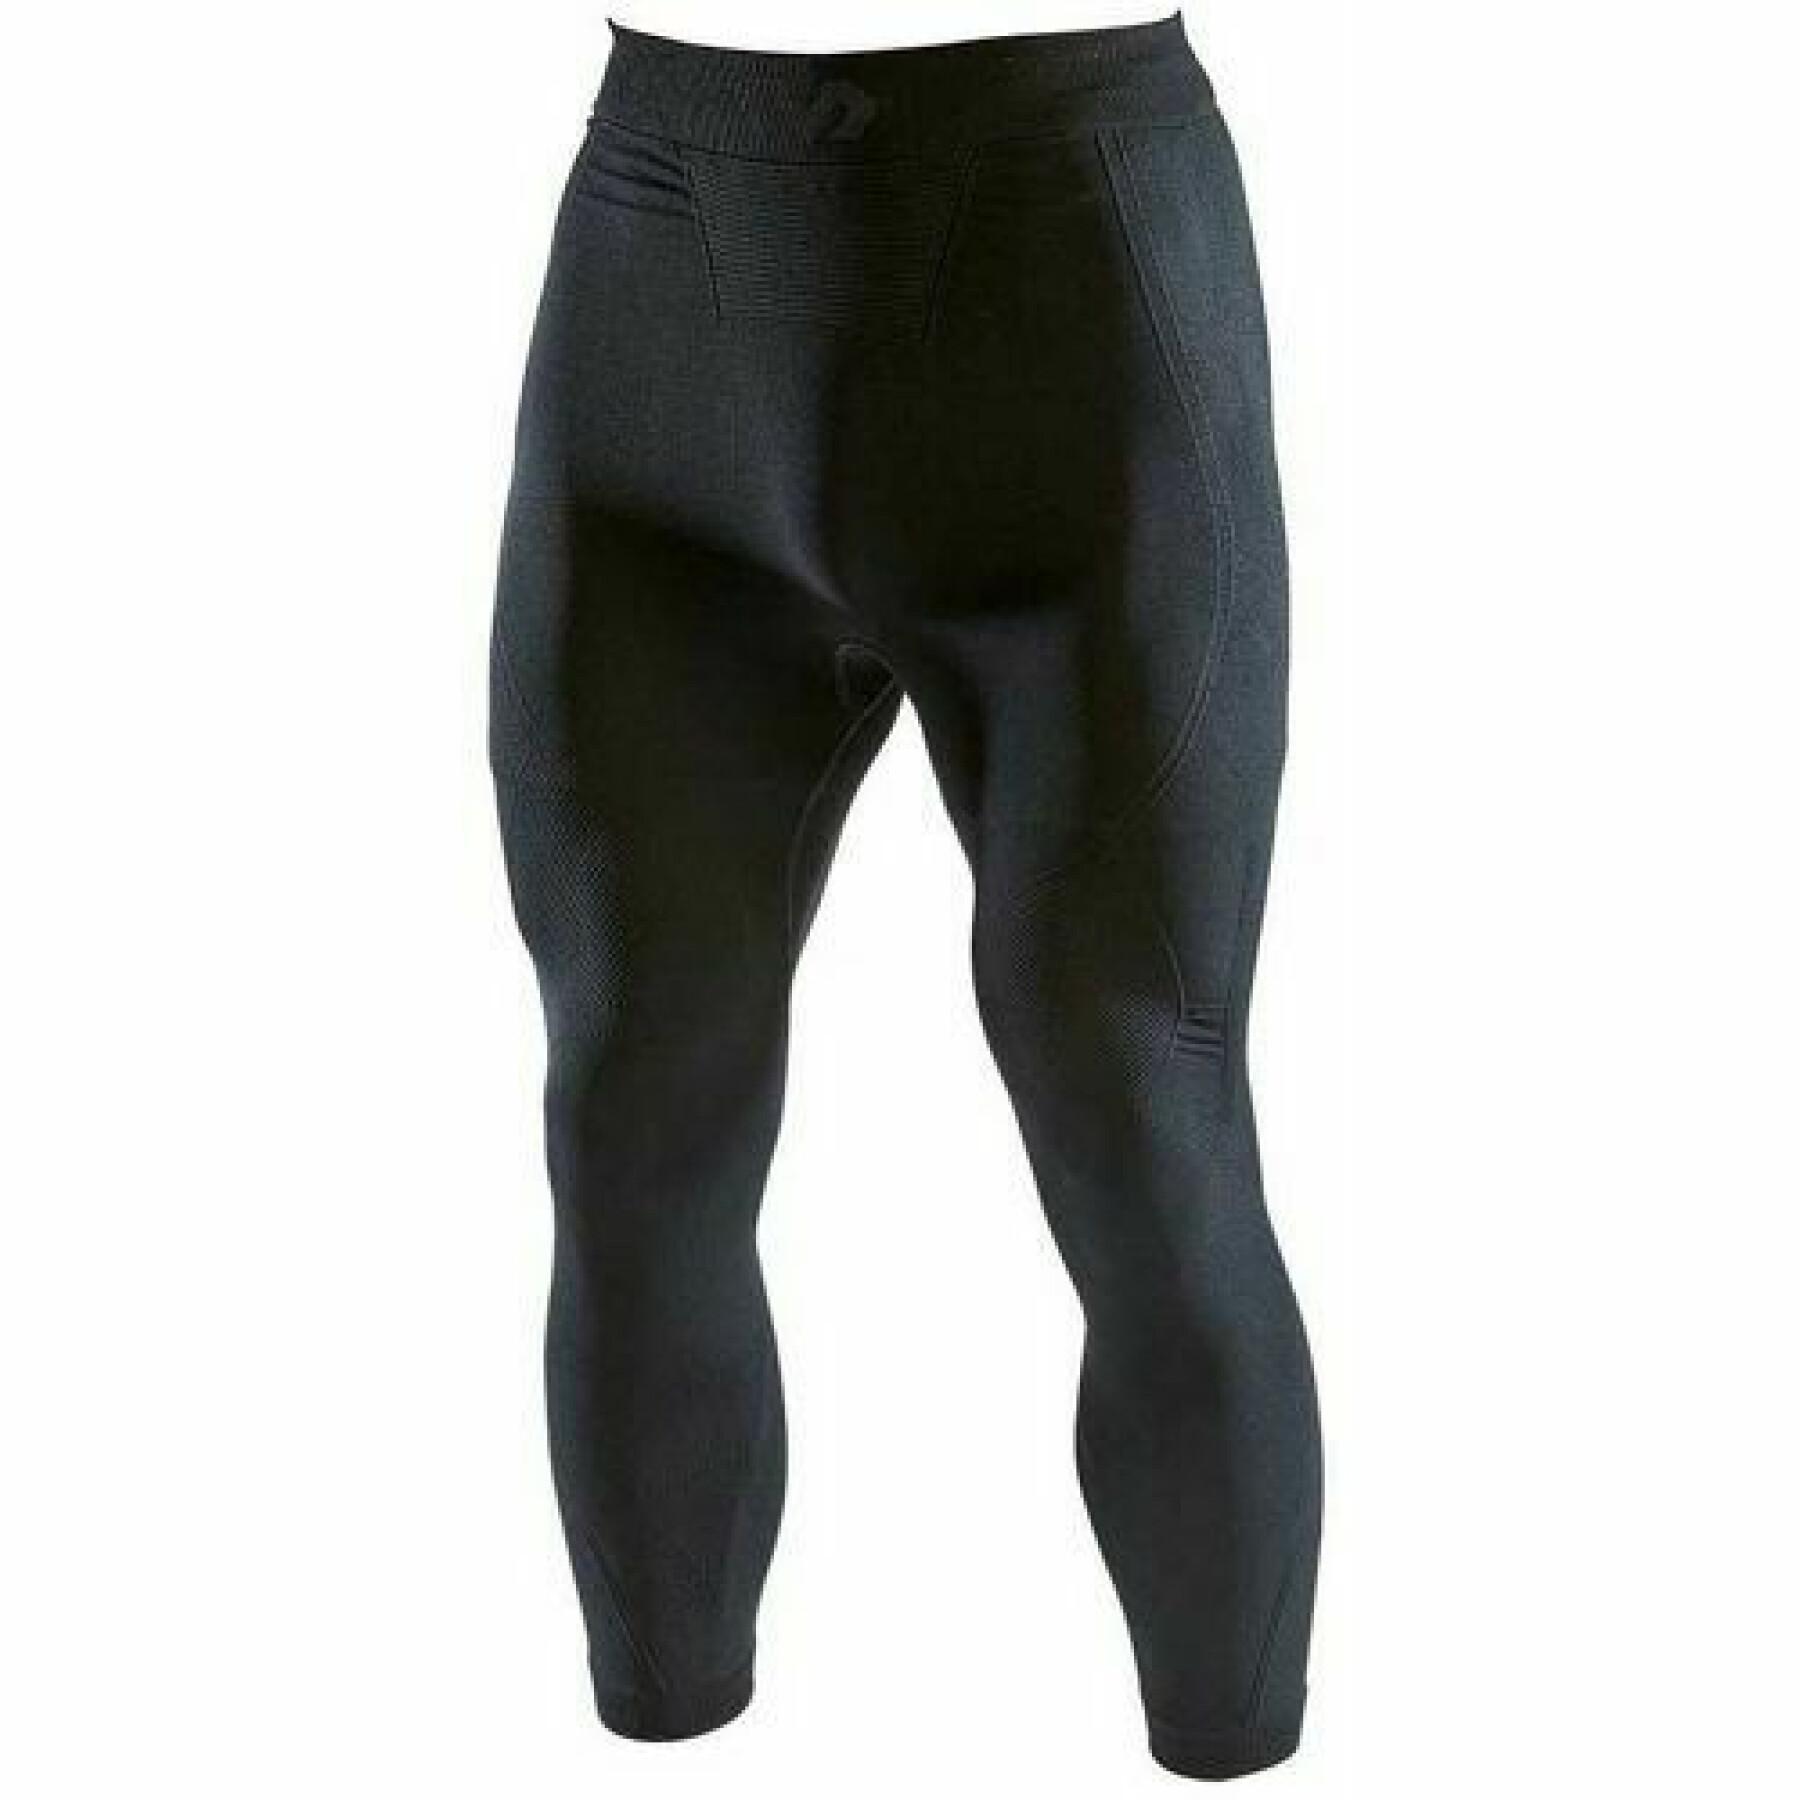 3/4 elite compression pants McDavid - Training Pants - Teamwear